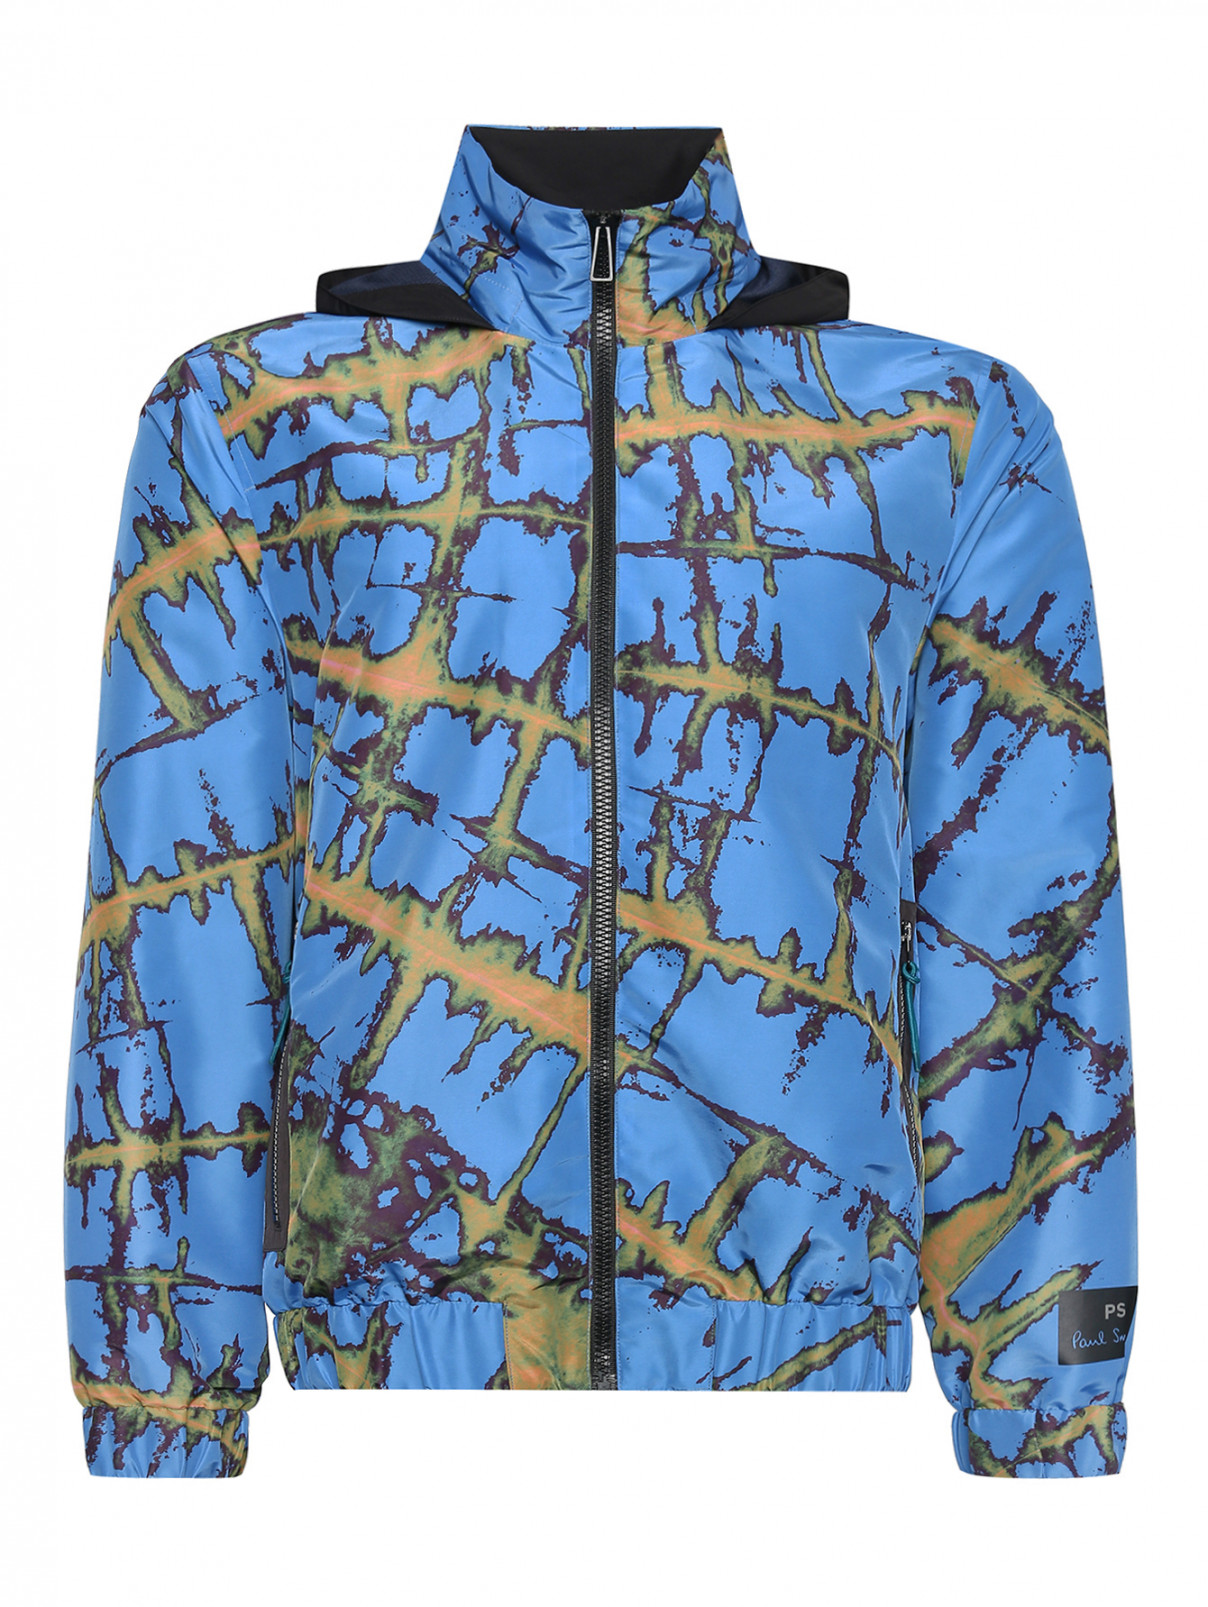 Куртка на молнии с узором Paul Smith  –  Общий вид  – Цвет:  Синий